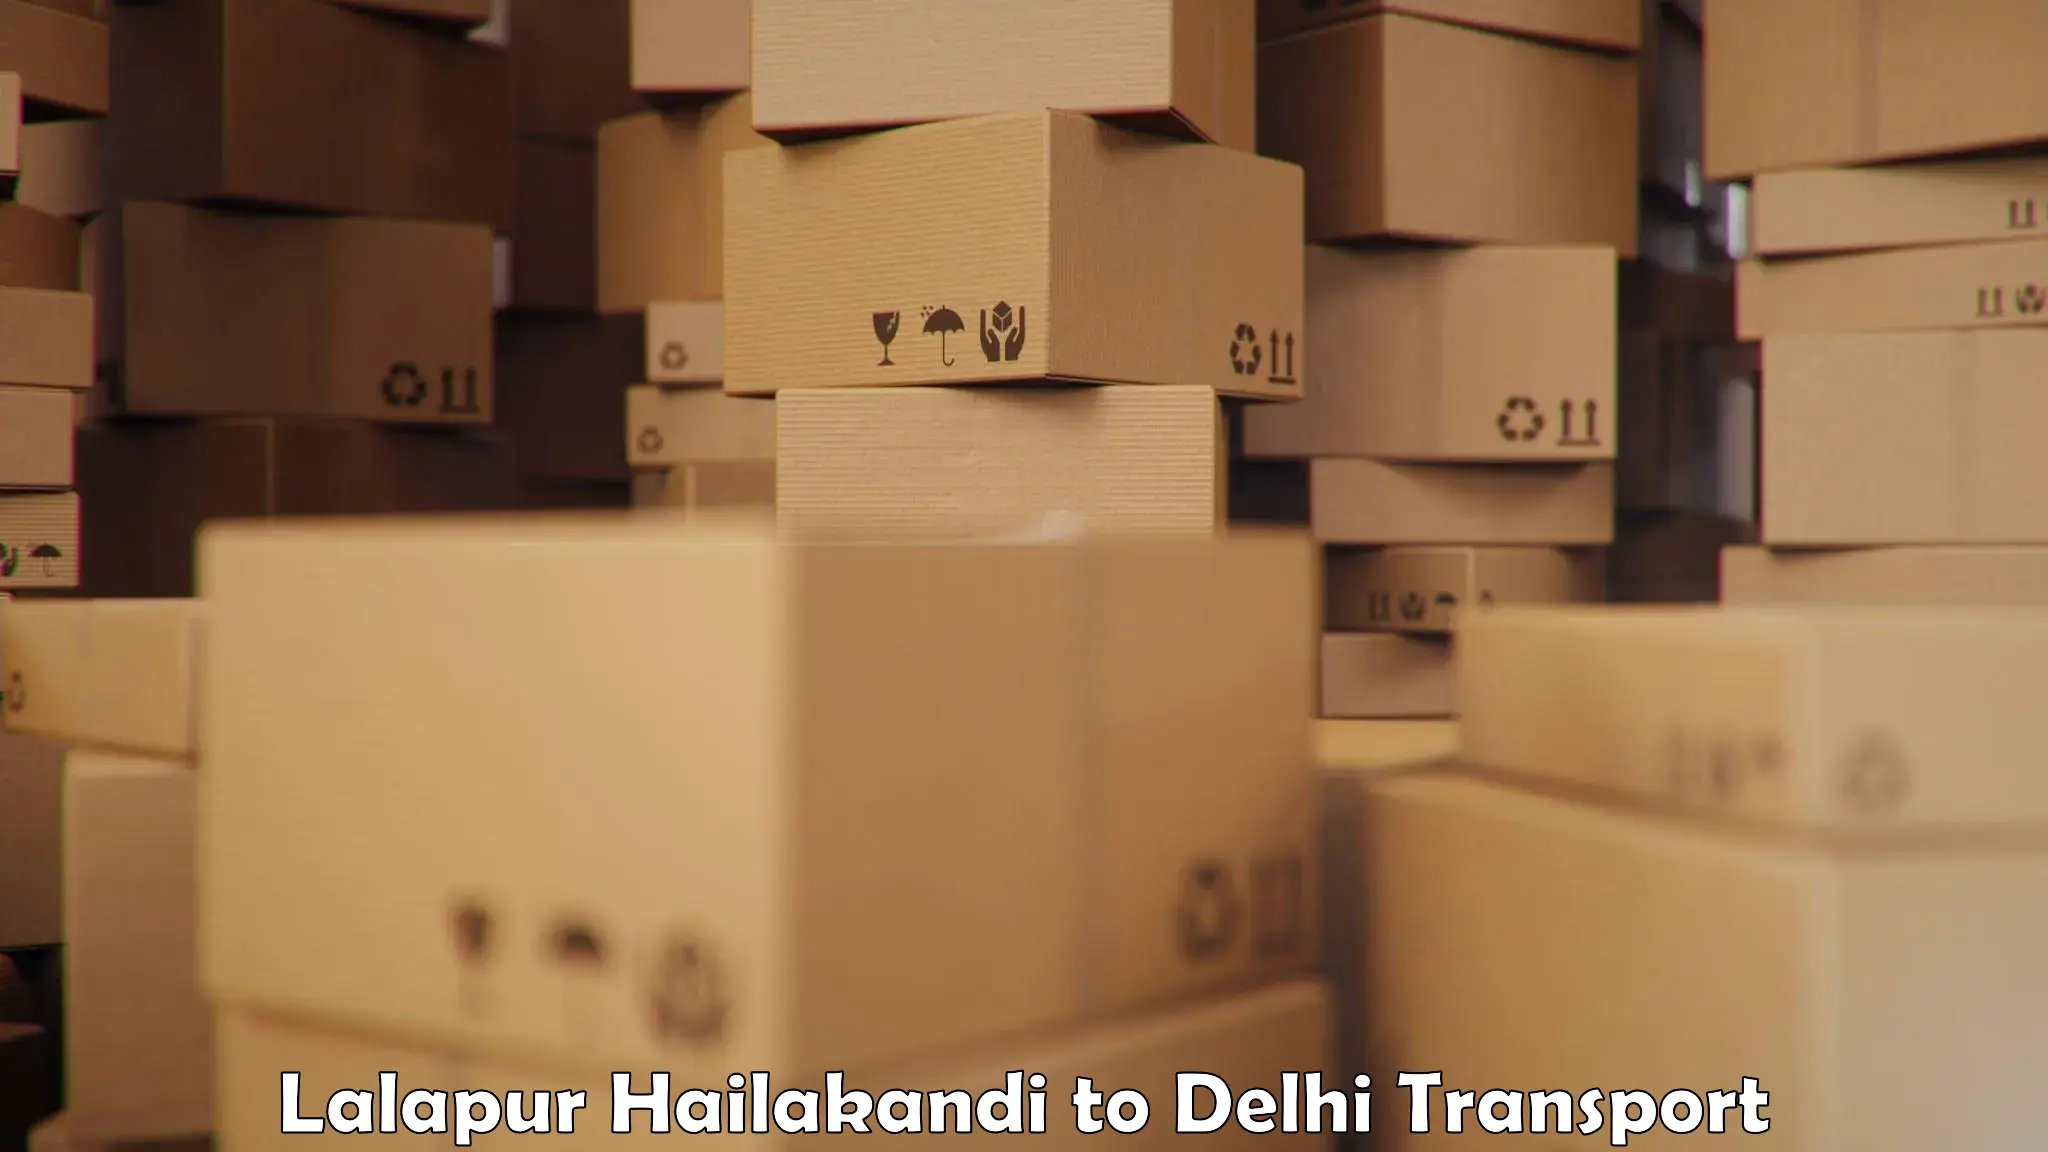 Goods delivery service Lalapur Hailakandi to Sarojini Nagar